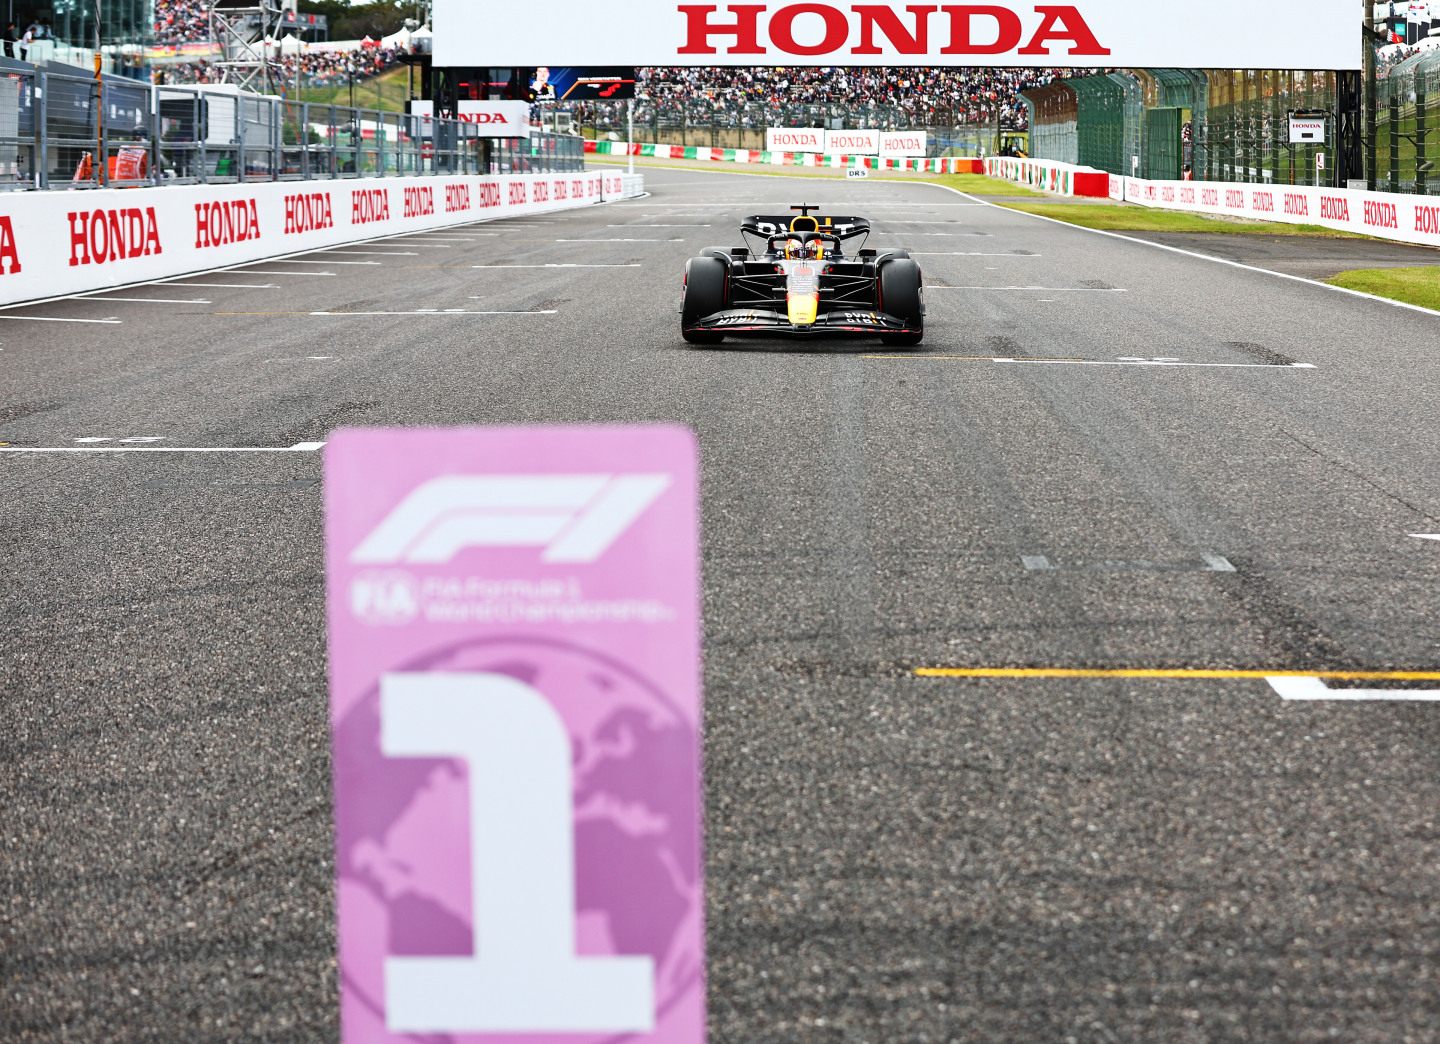 Макс Ферстаппен на поул-позиции Гран При Японии © Getty Images / Red Bull Content Pool